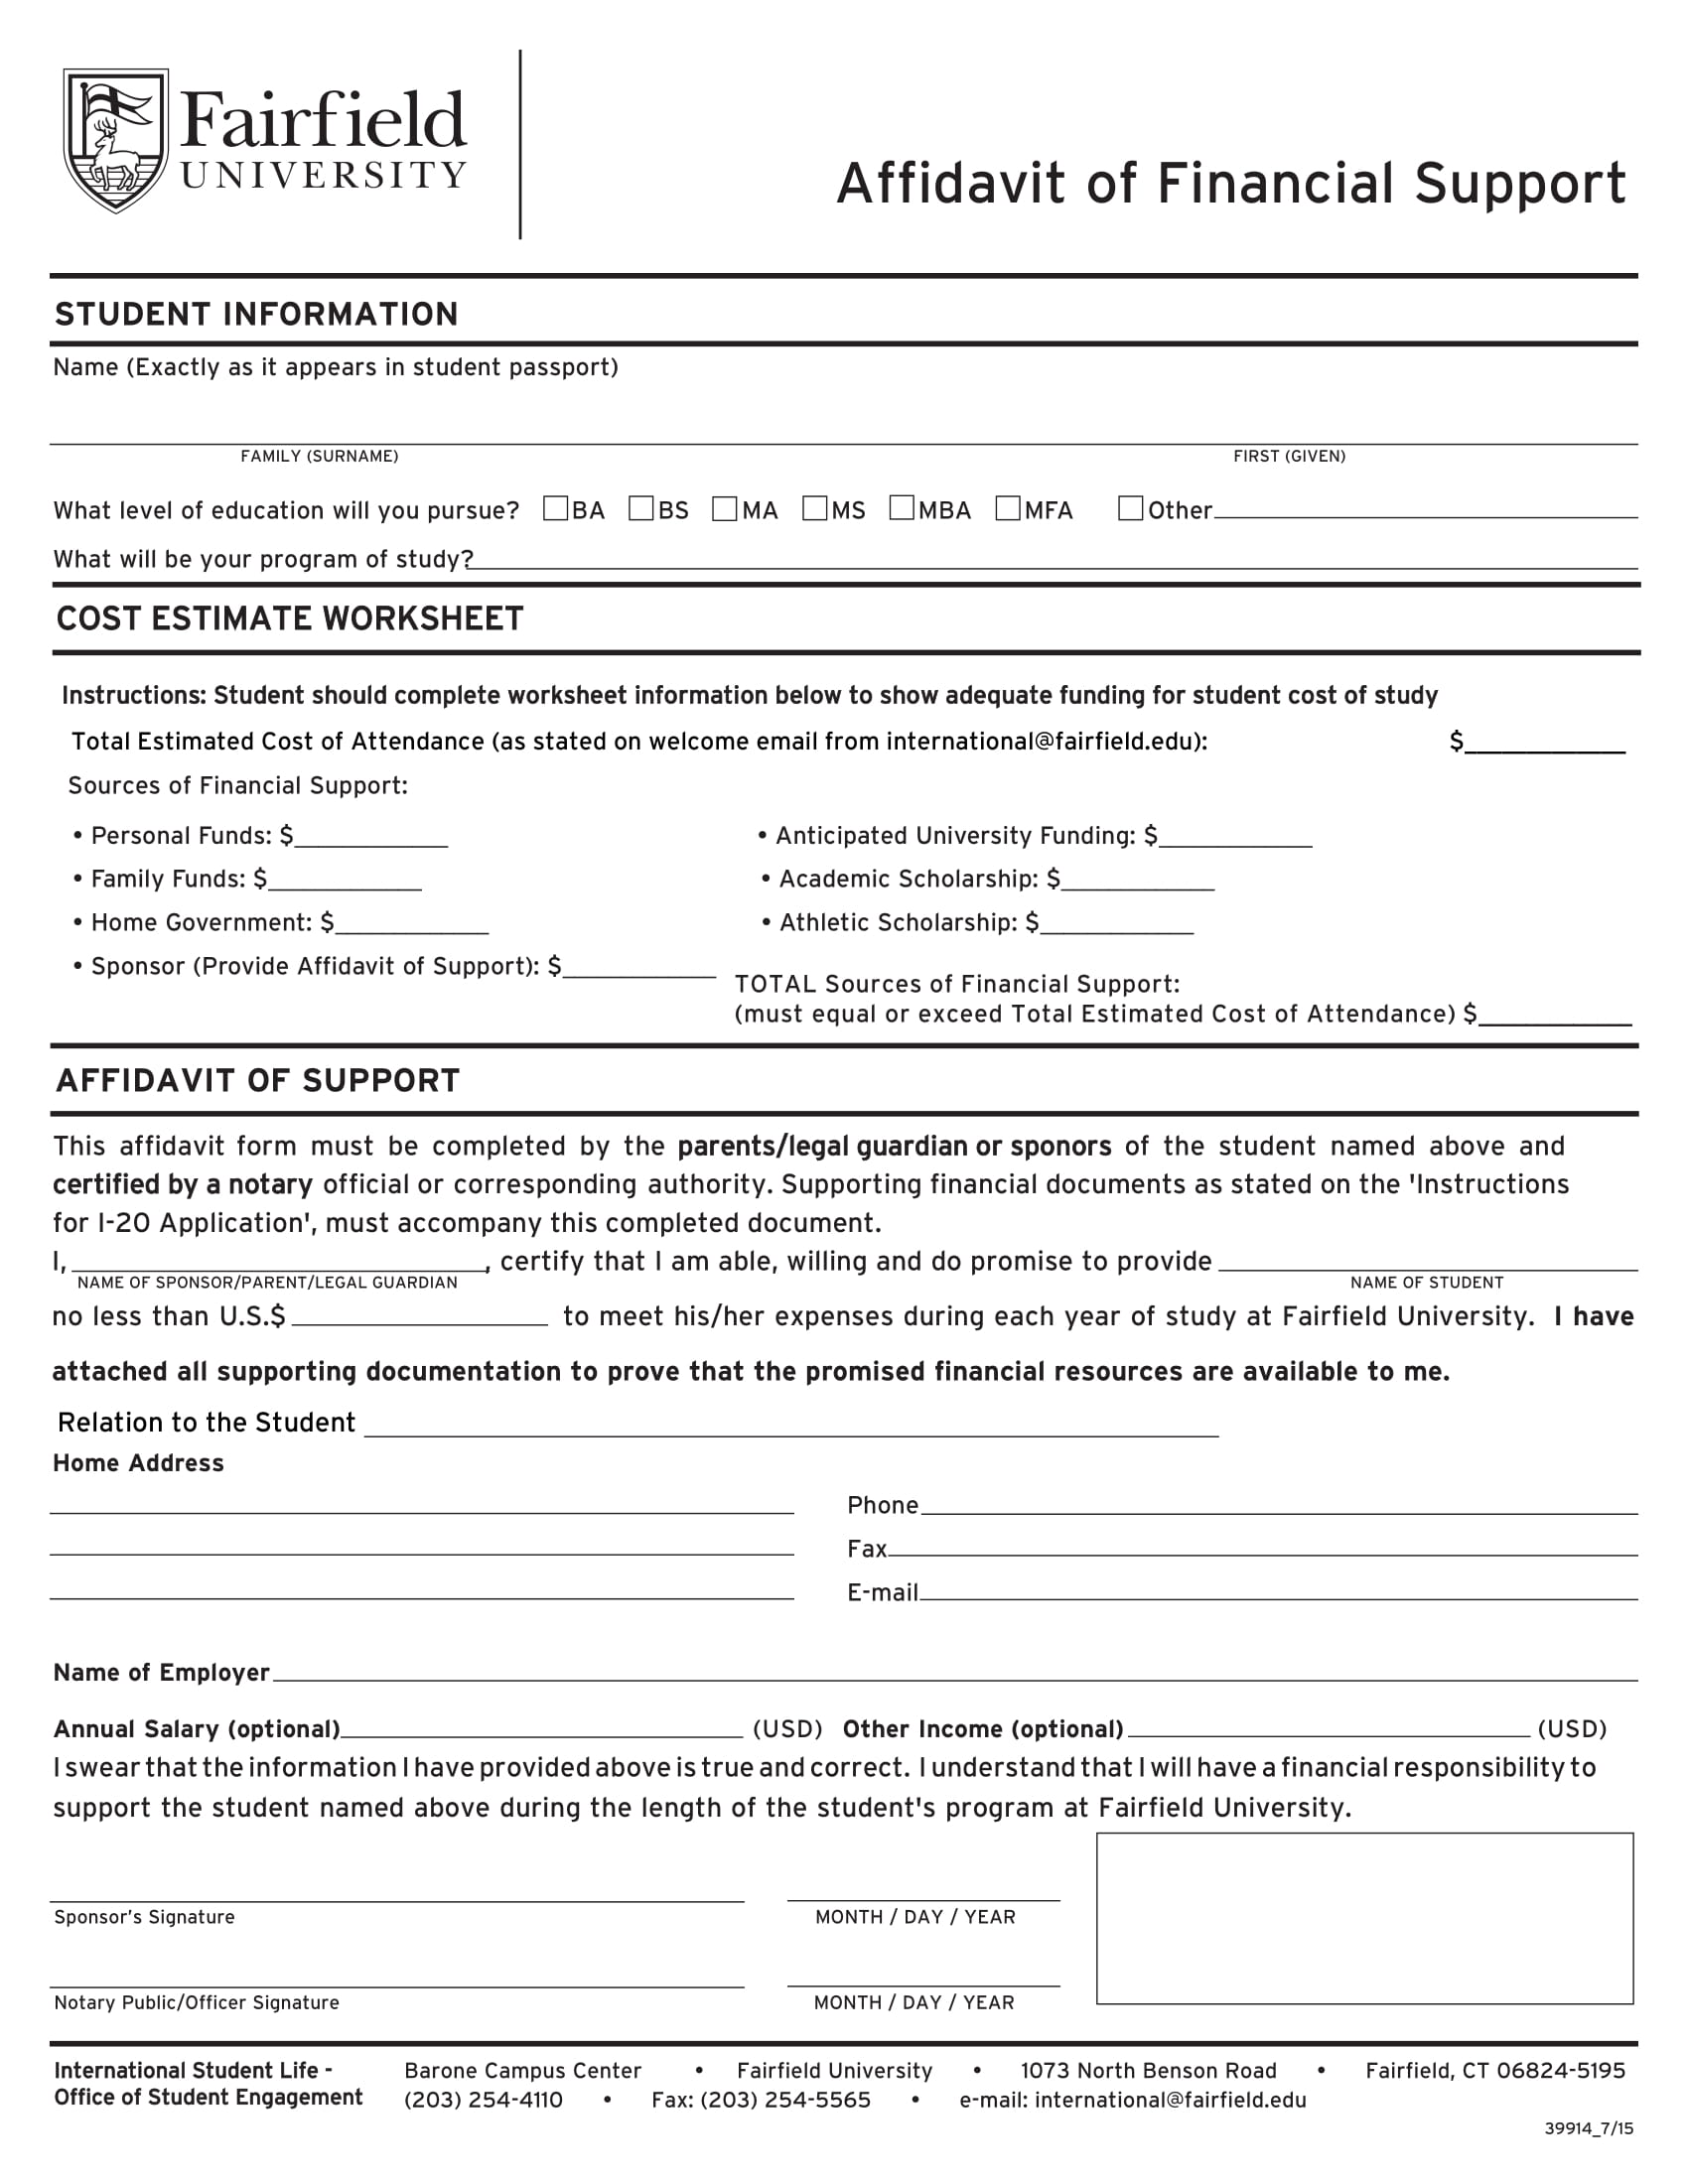 intst affidavit support form